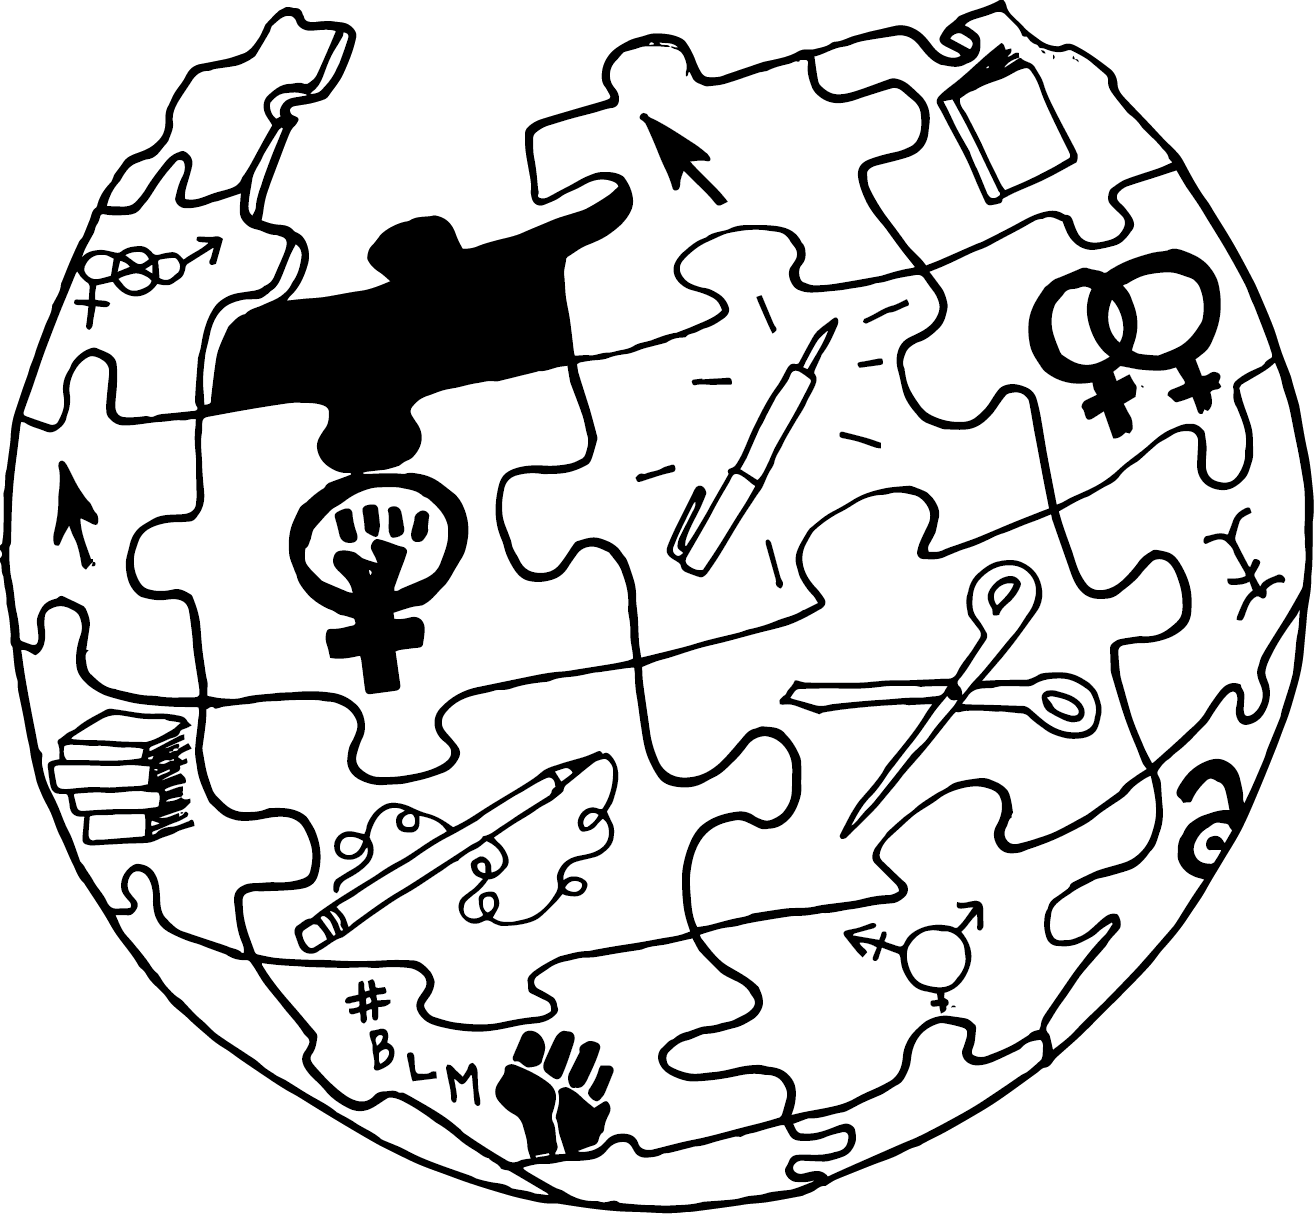 Illustrated wikipedia logo, where puzzle pieces contain feminist symbols.